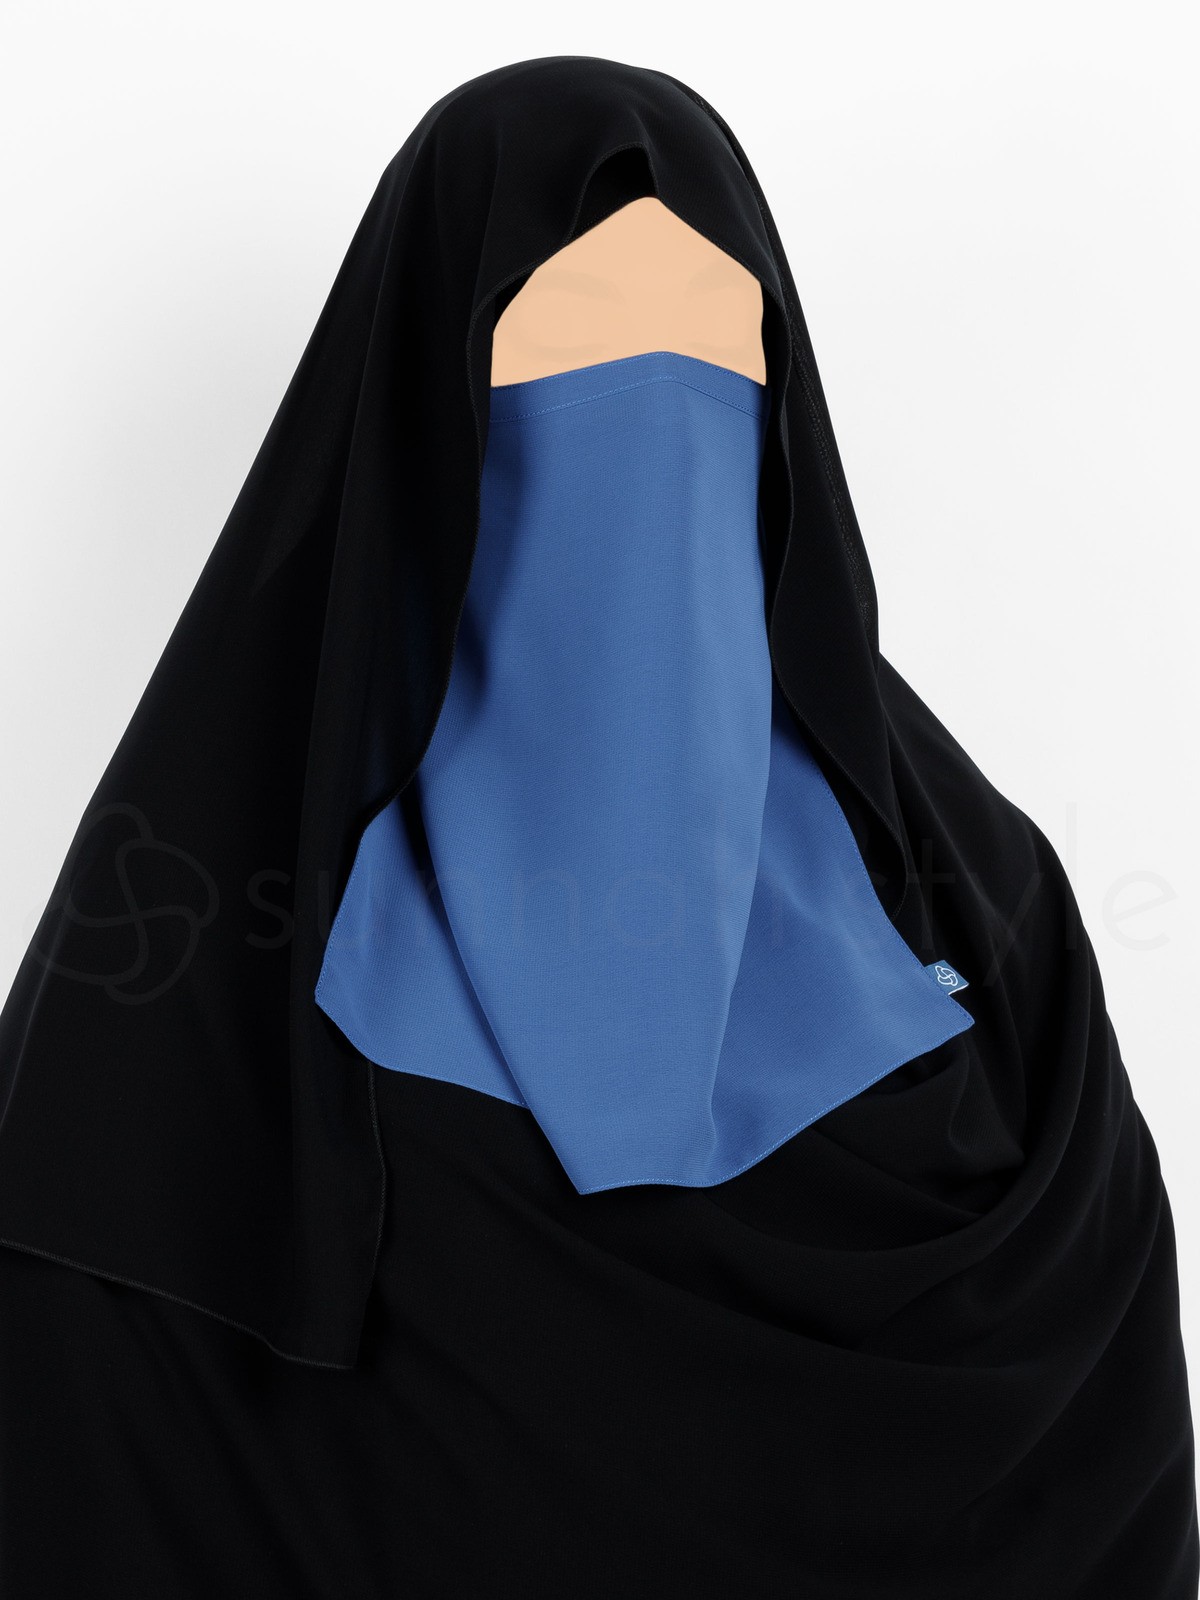 Sunnah Style - Tying Half Niqab (Blue Jay)